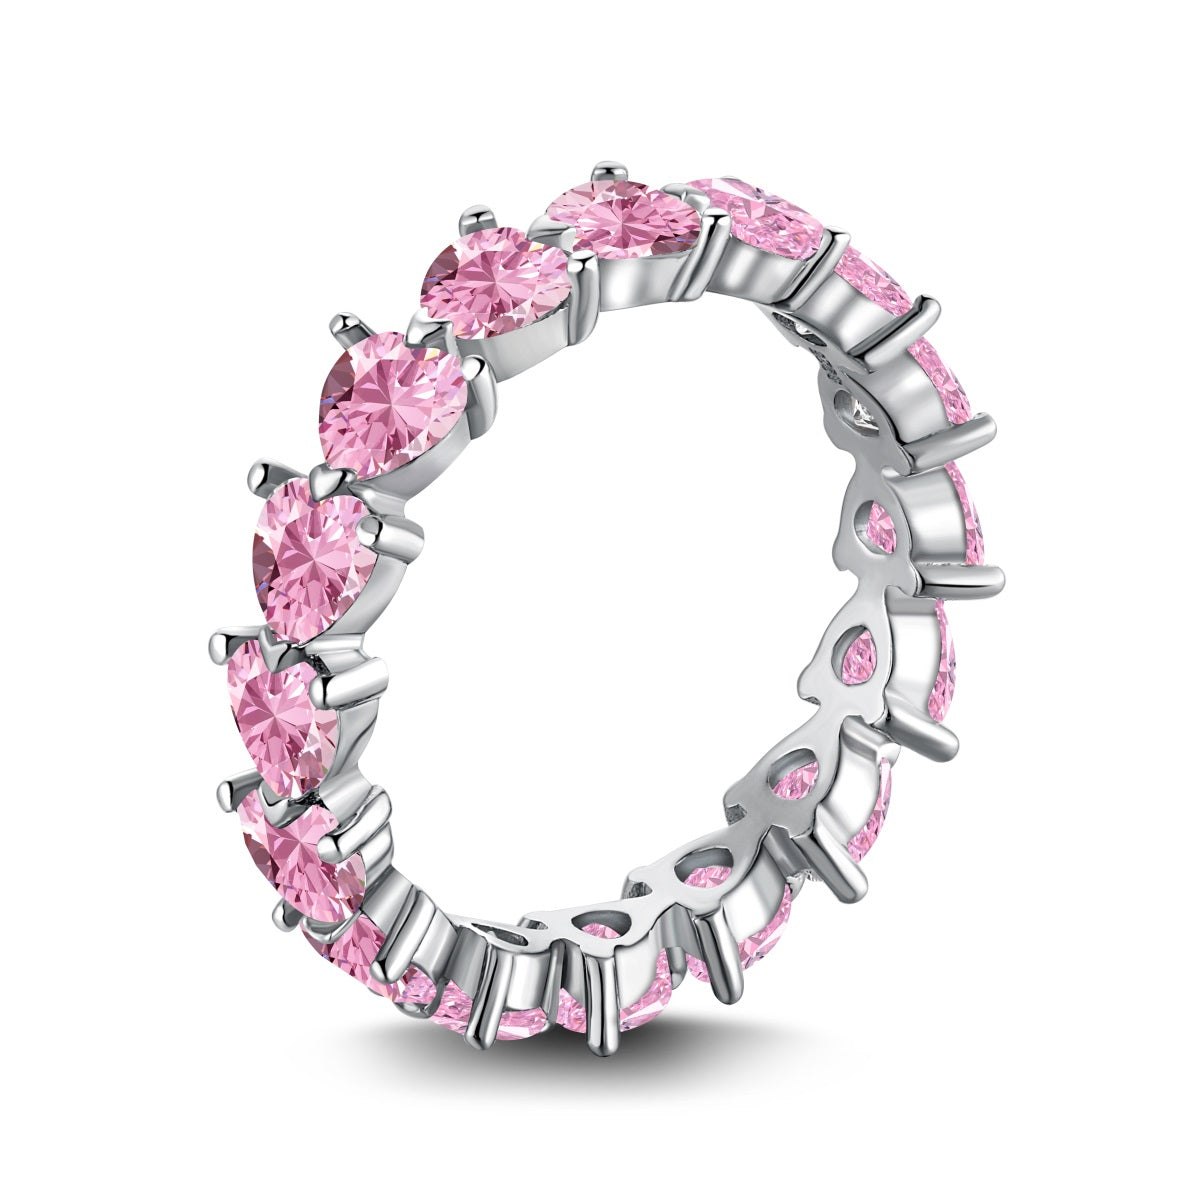 Versailles Pink Heart Ring 10